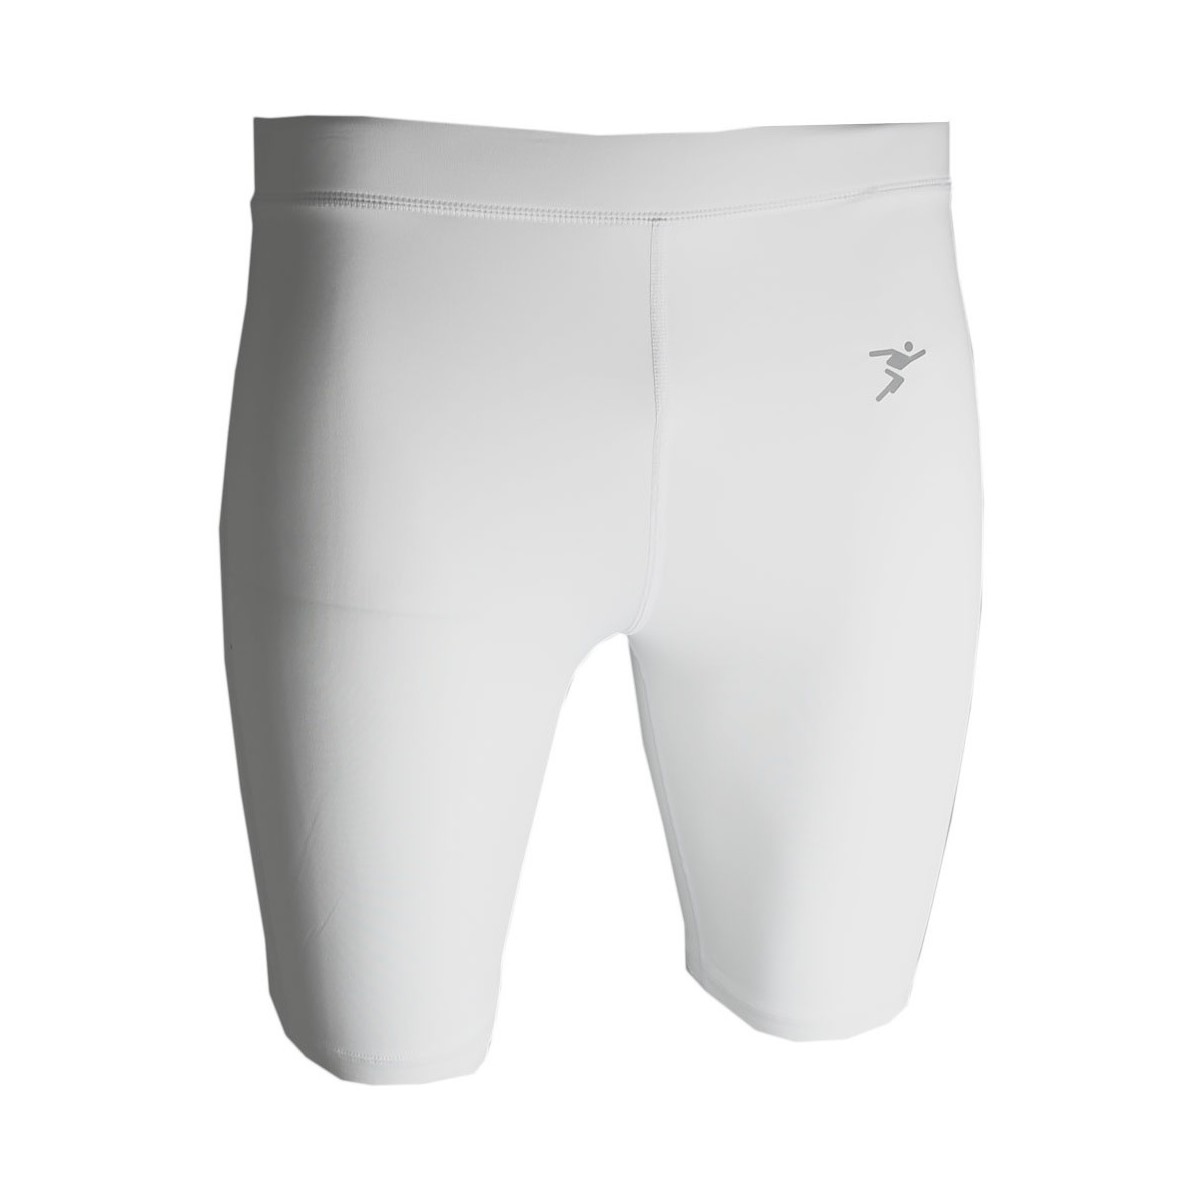 textil Shorts / Bermudas Precision Essential Blanco